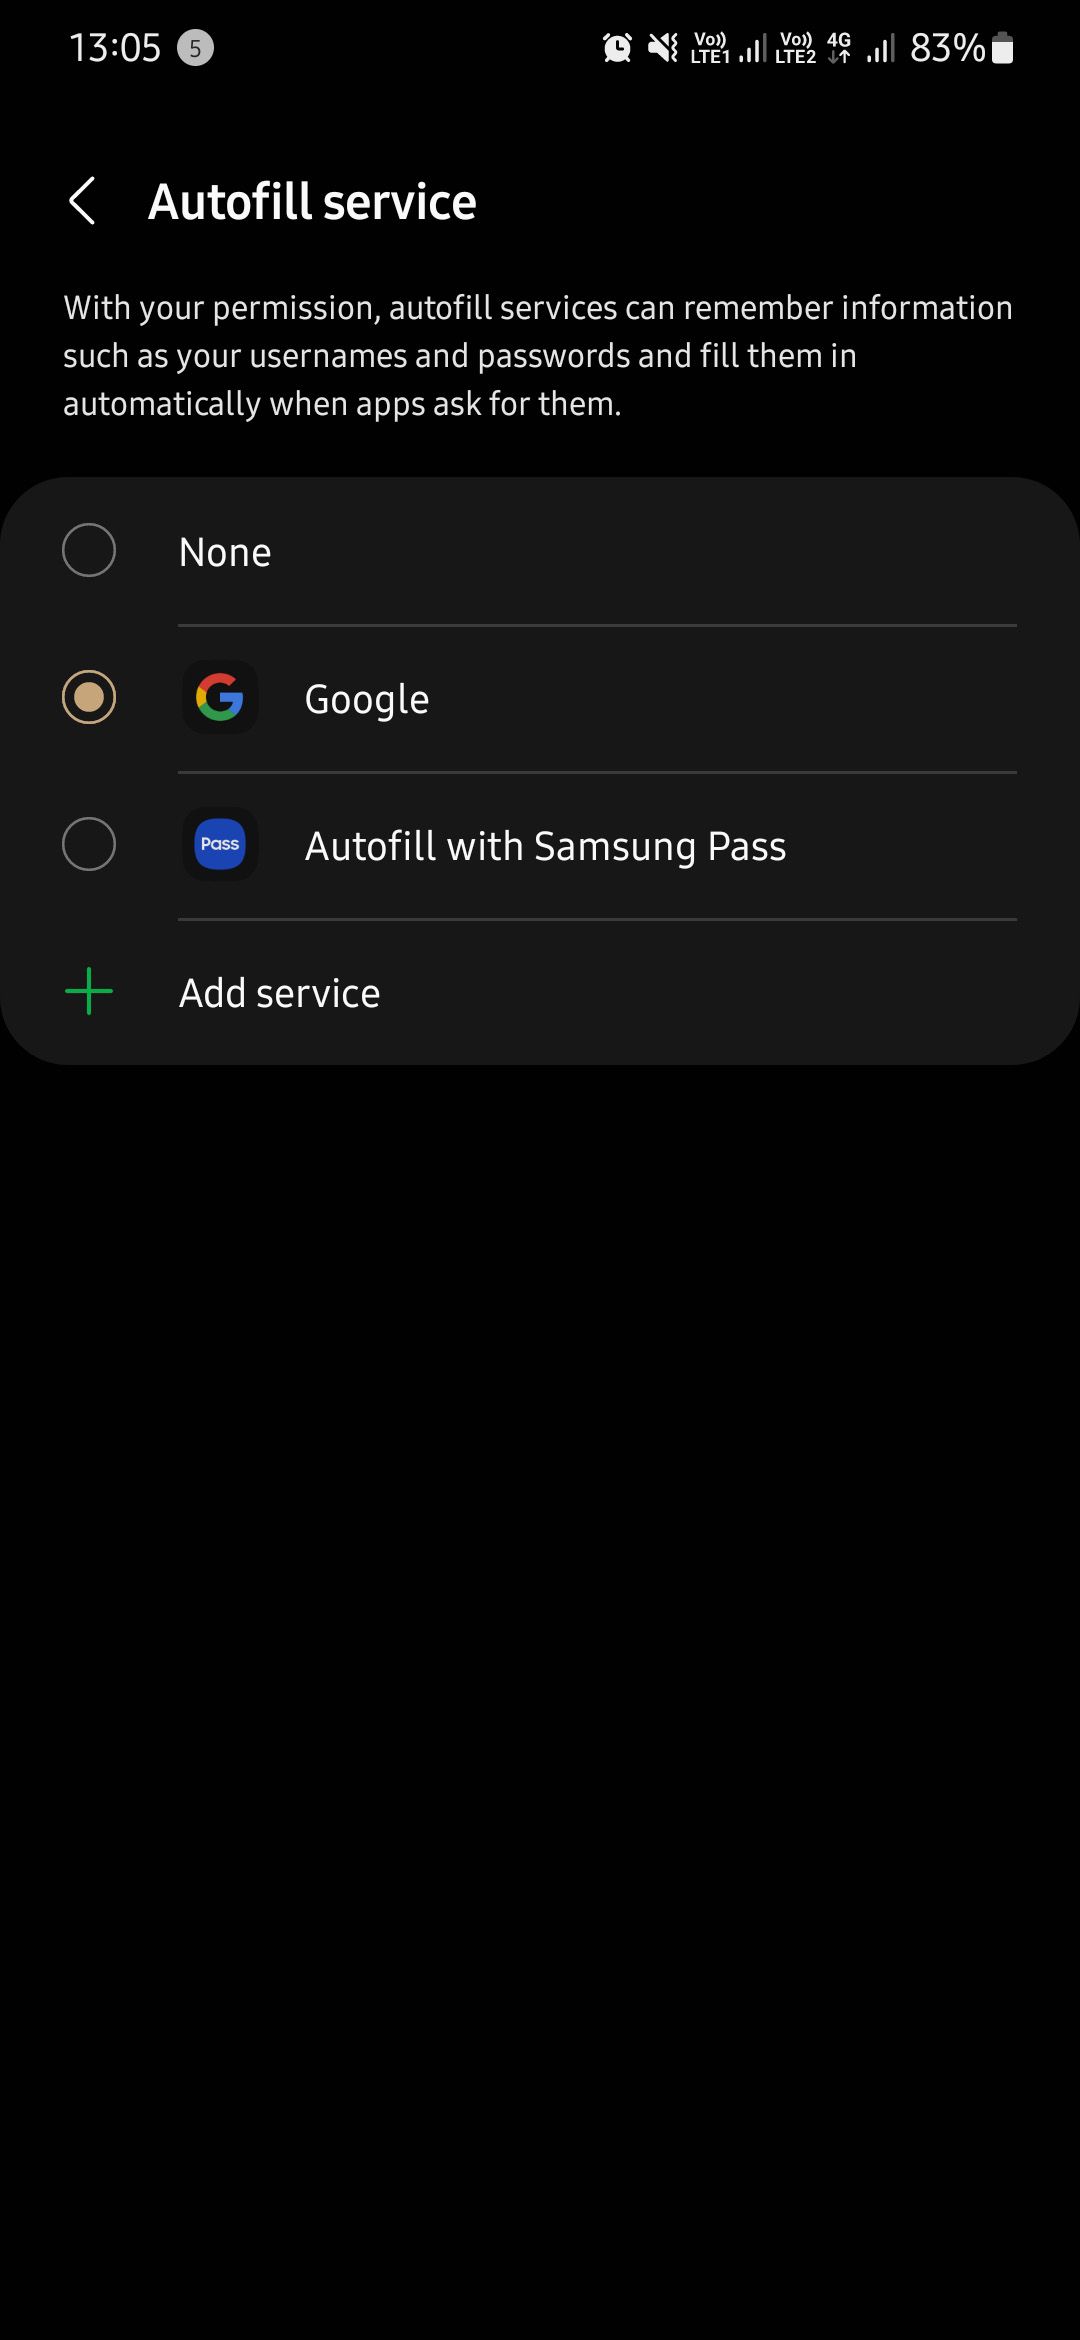 Choosing Google as autofill option